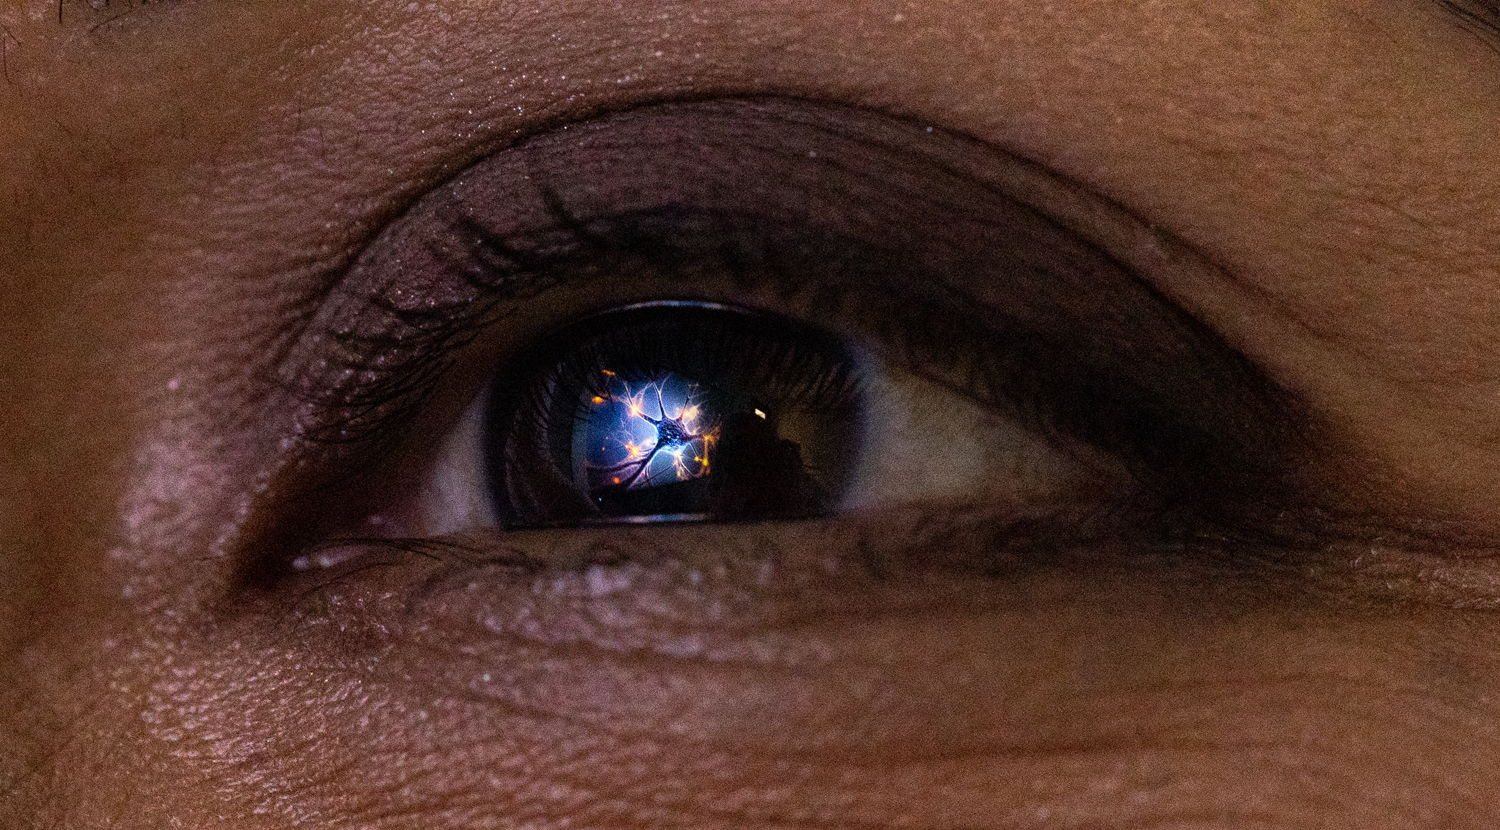 a neuron reflected in Tanya Garcia's eye